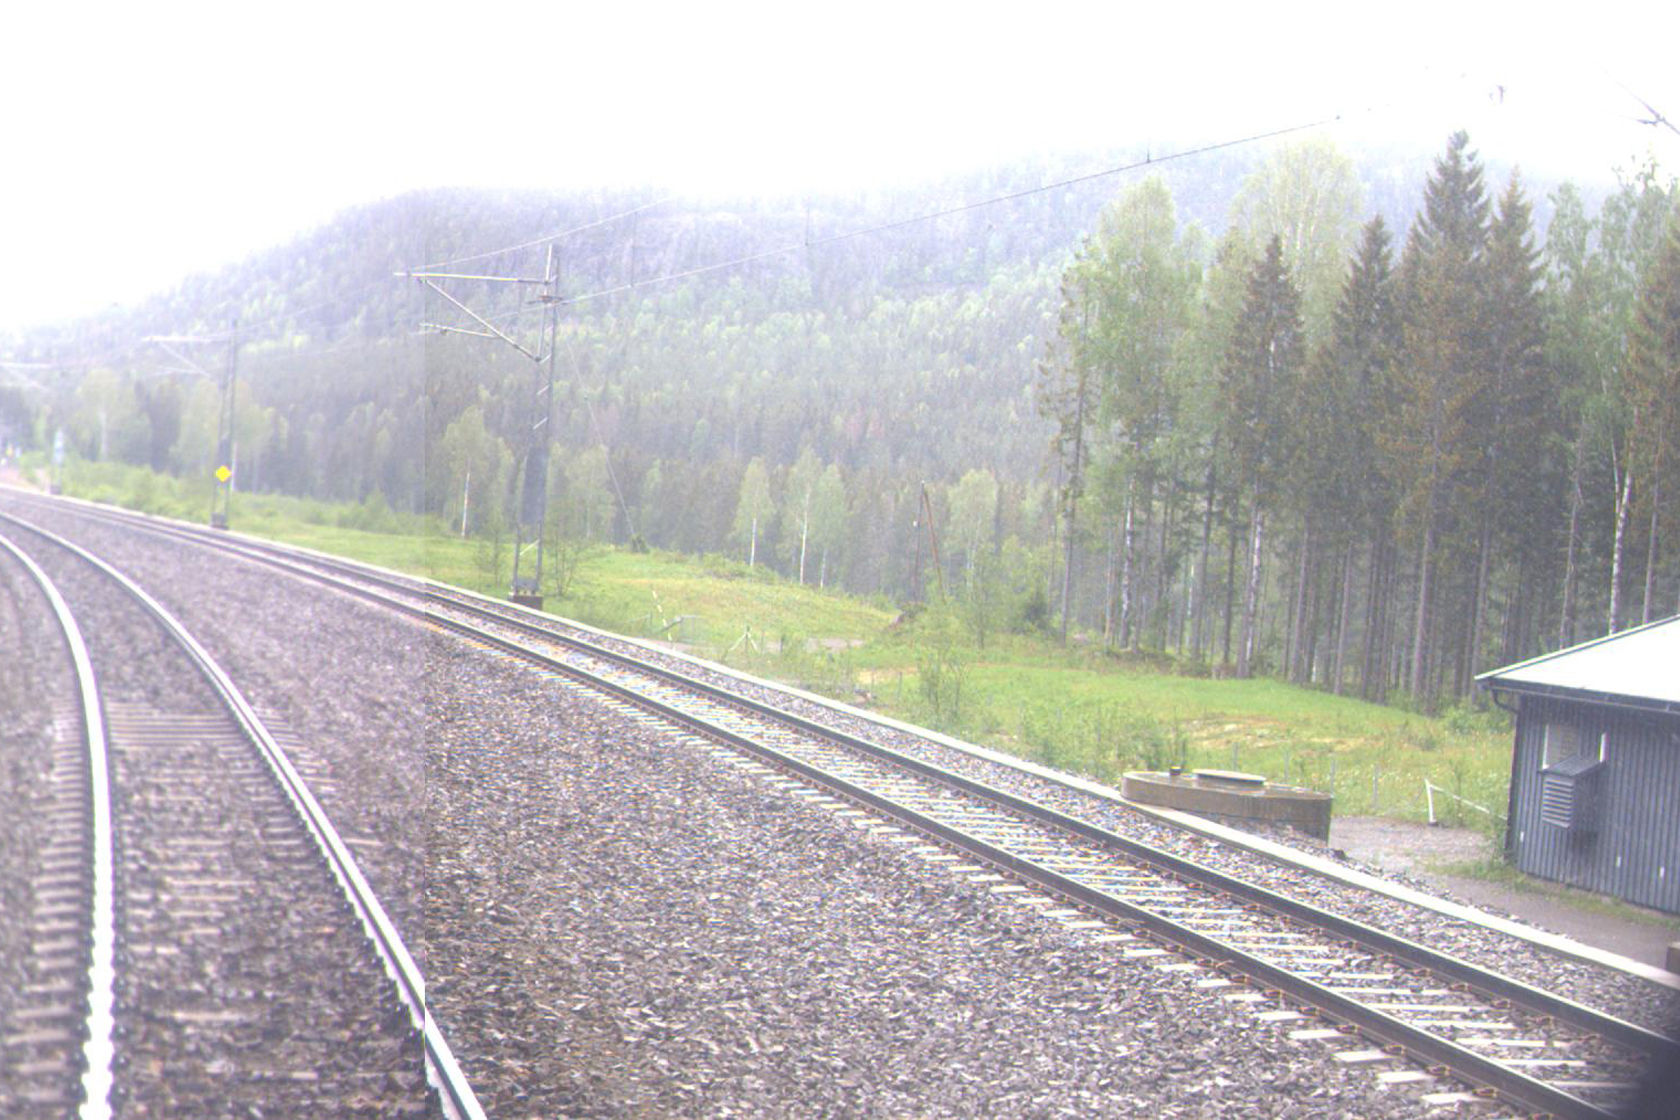 Tracks and building at Jensrud station